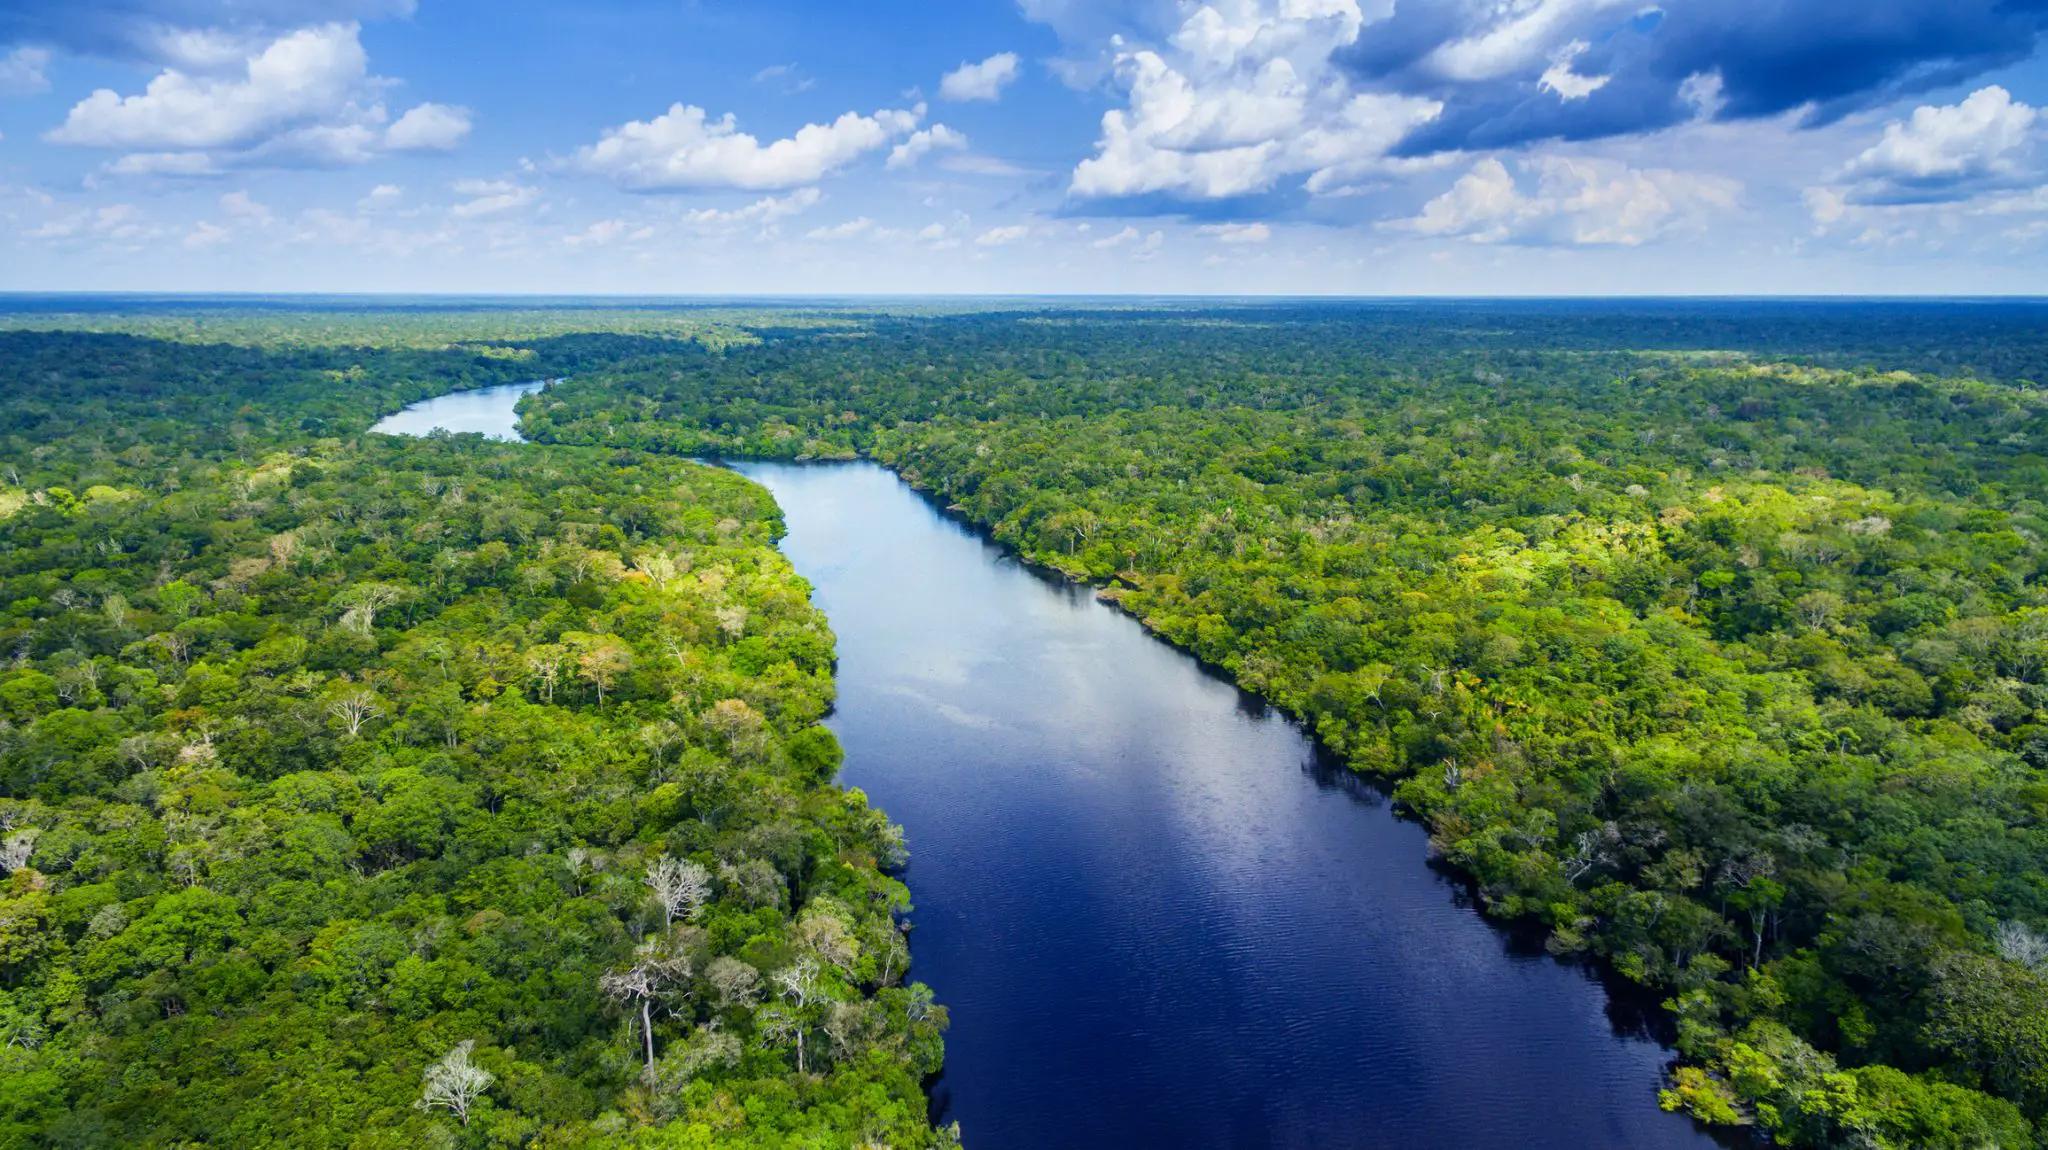 The Amazon river